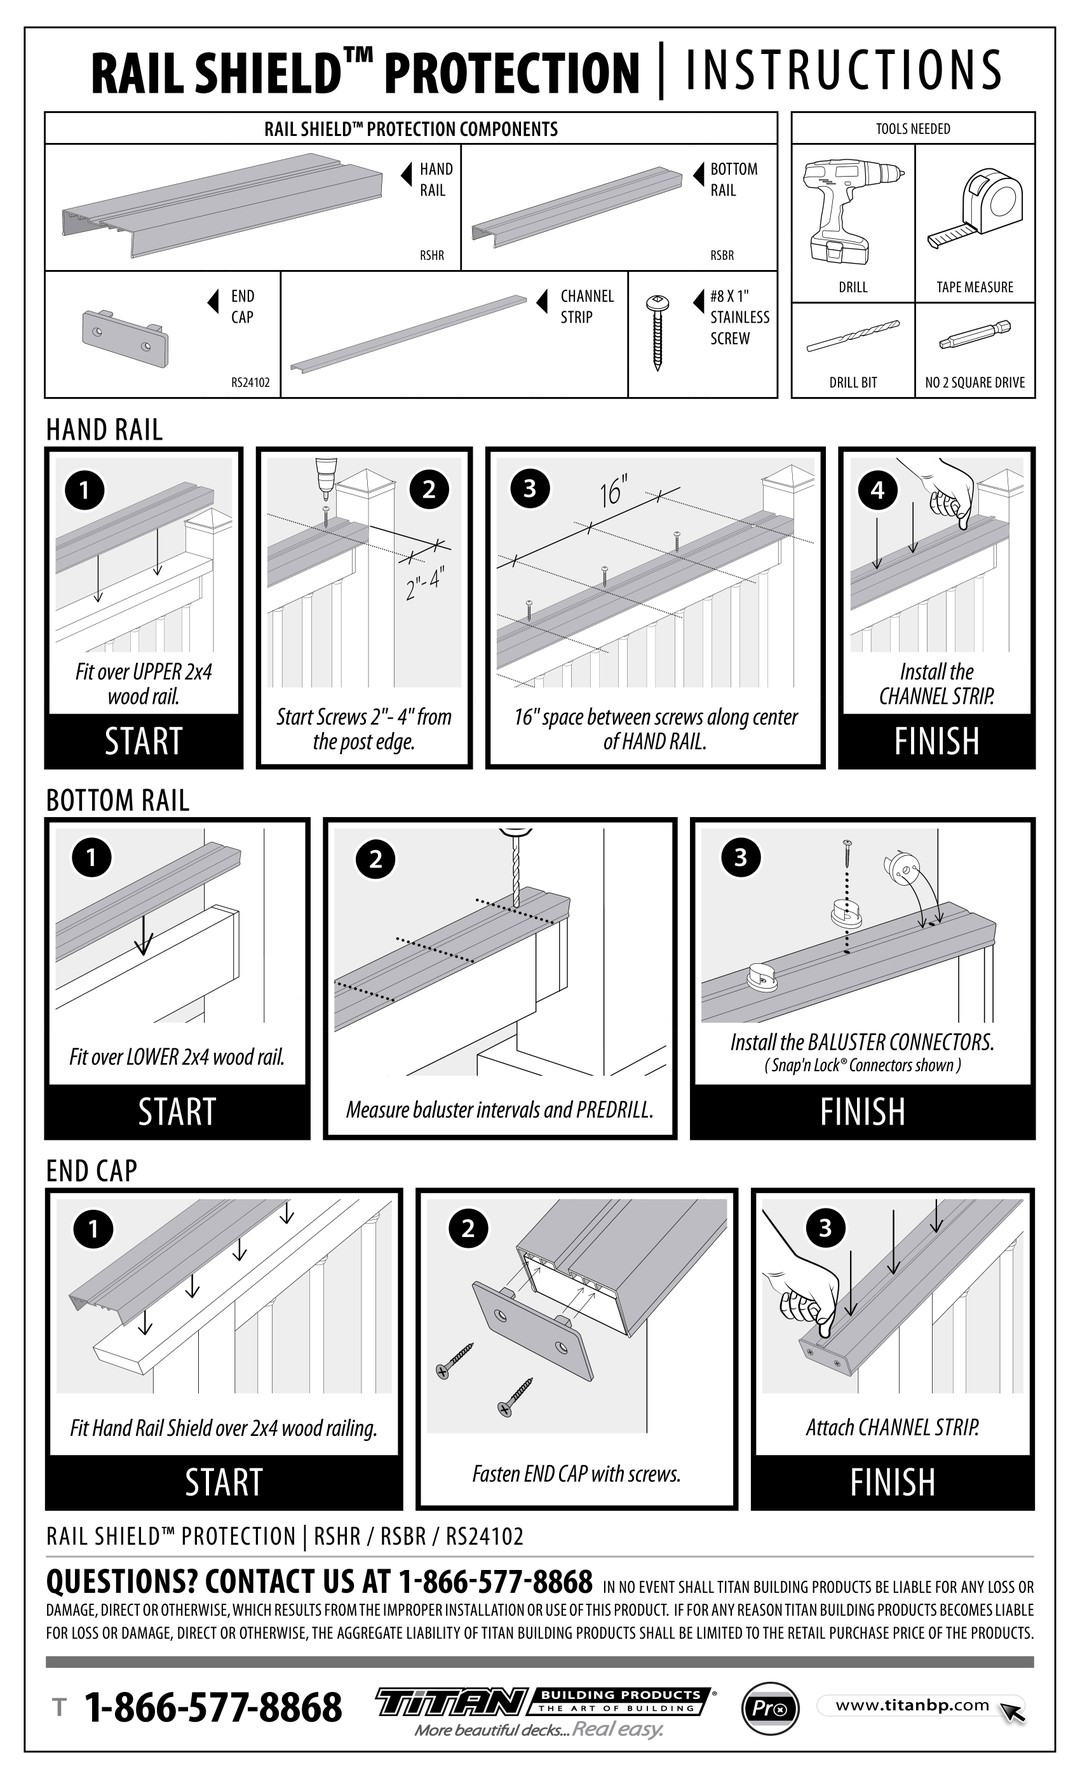 Rail Shield Handrail Instructions